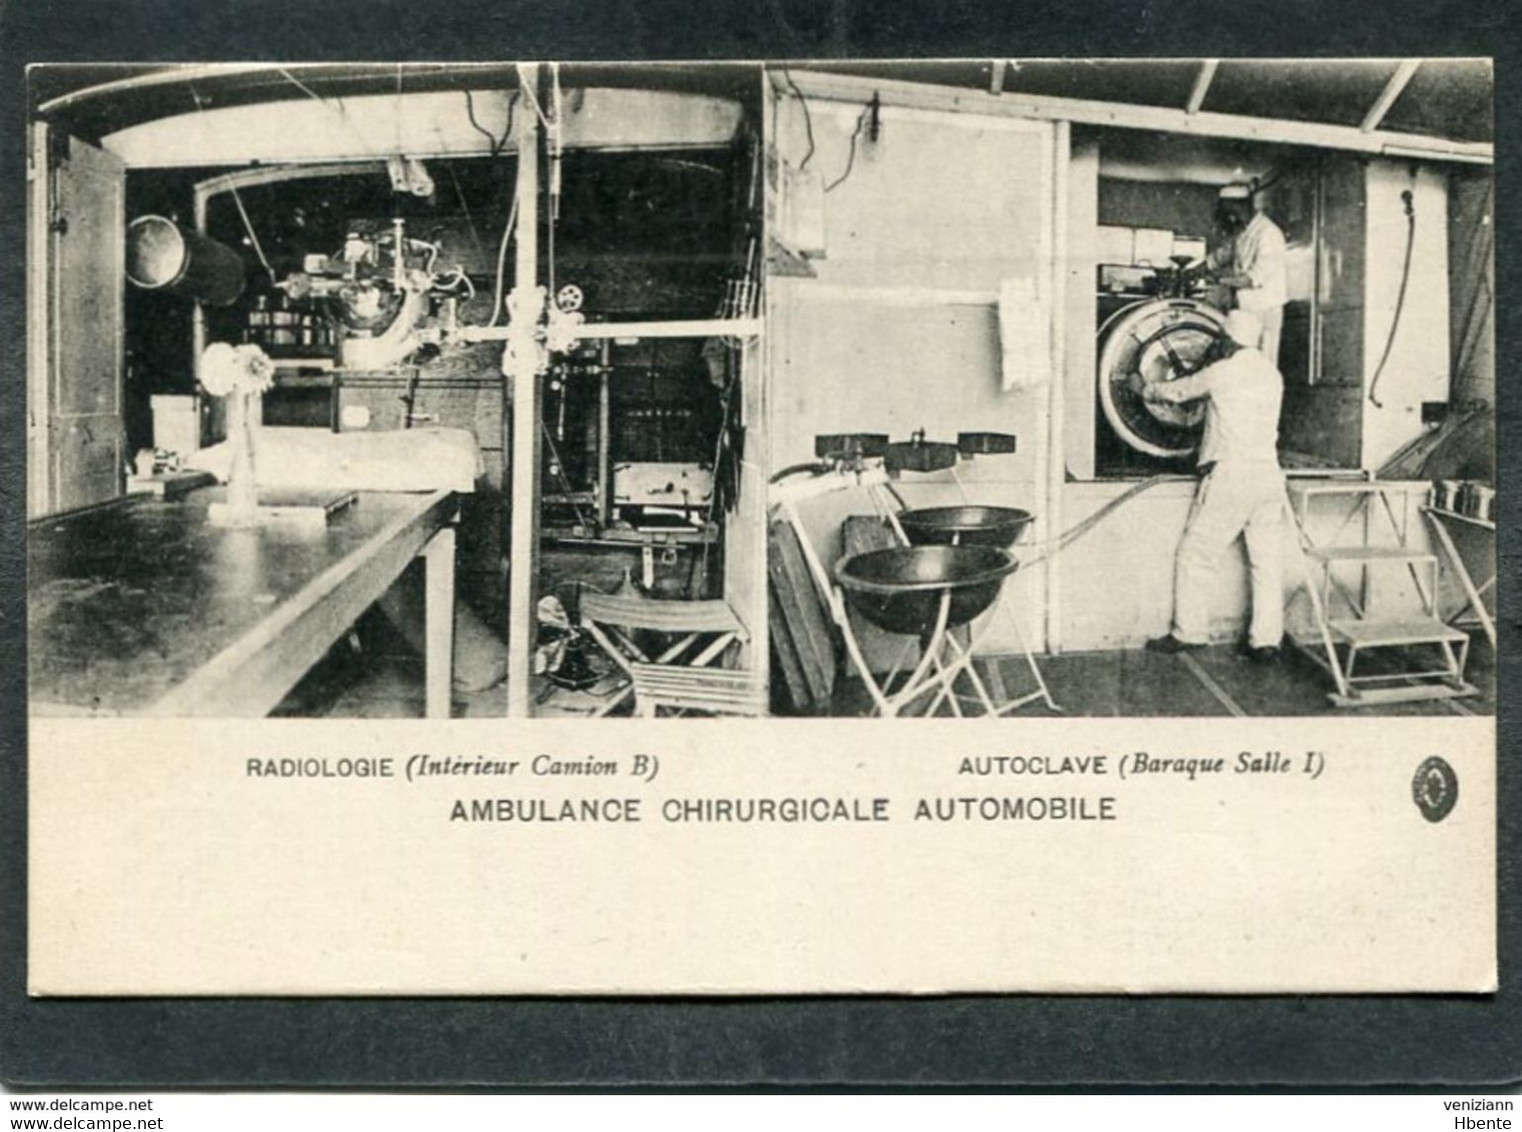 Ambulance Chirurgicale Automobile - Radiologie (Camion B) Autoclave (Baraque Salle 1) (Photo) - Automobiles